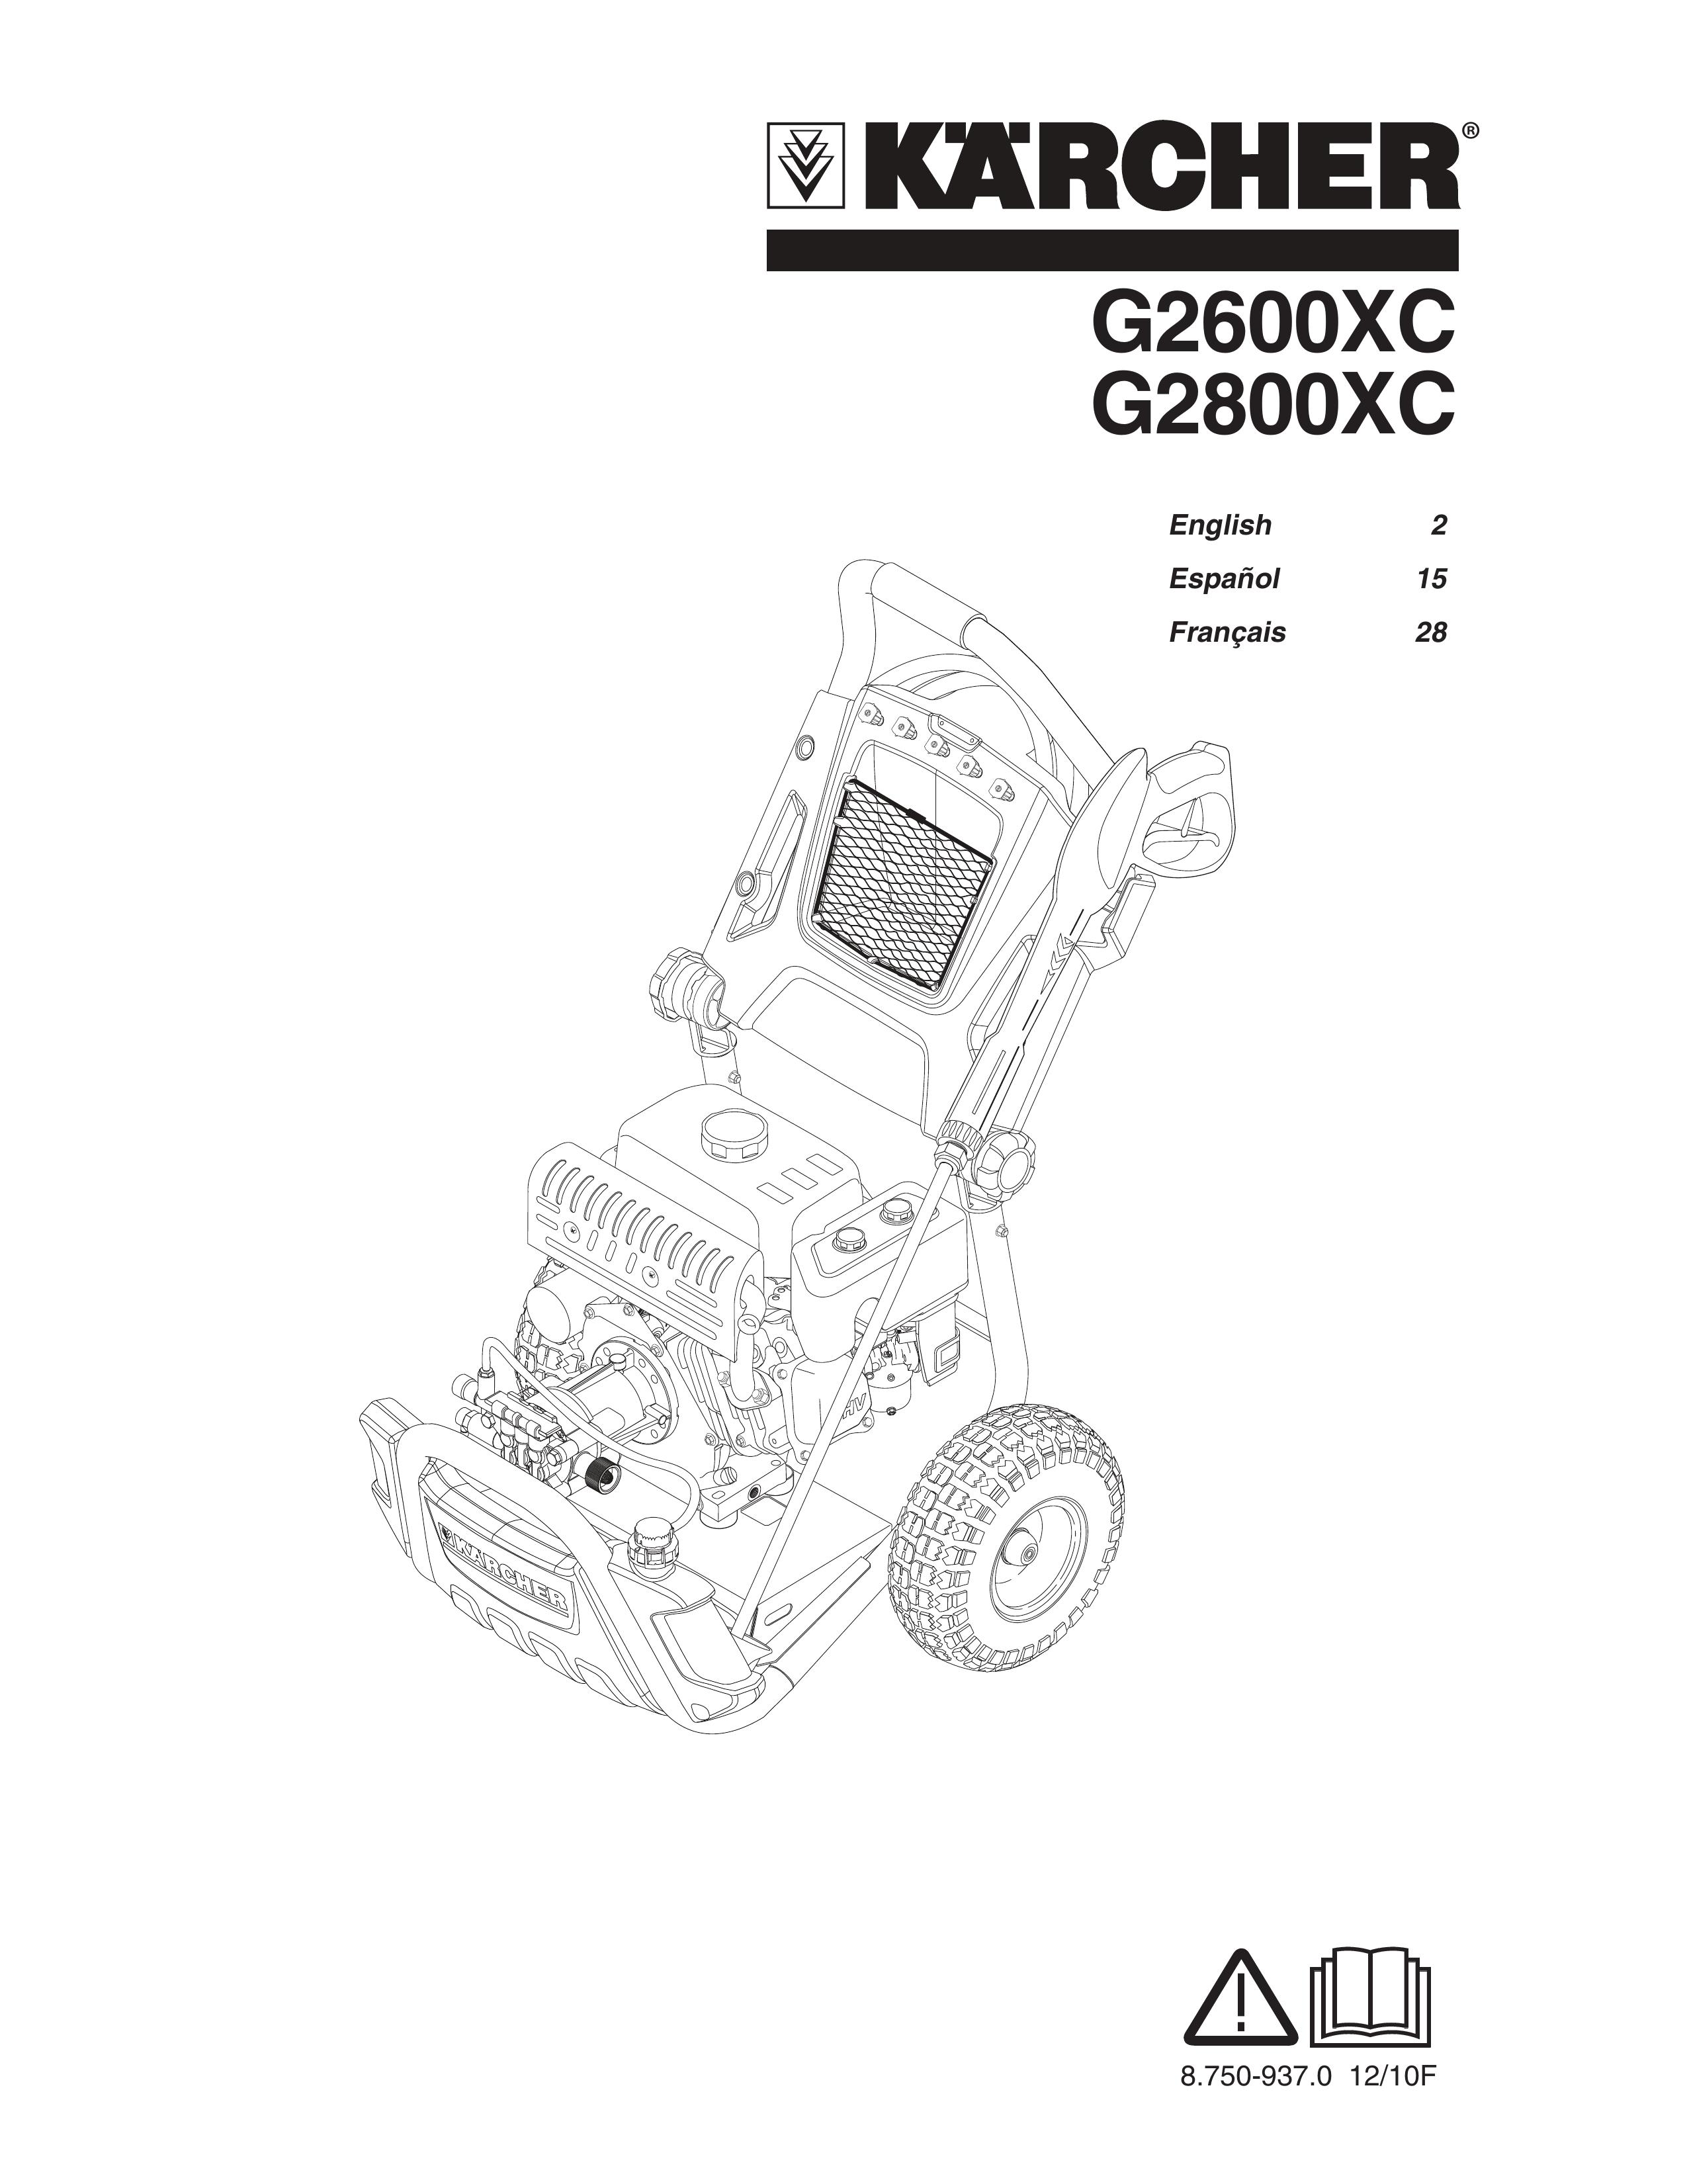 Karcher G2600XC Pressure Washer User Manual